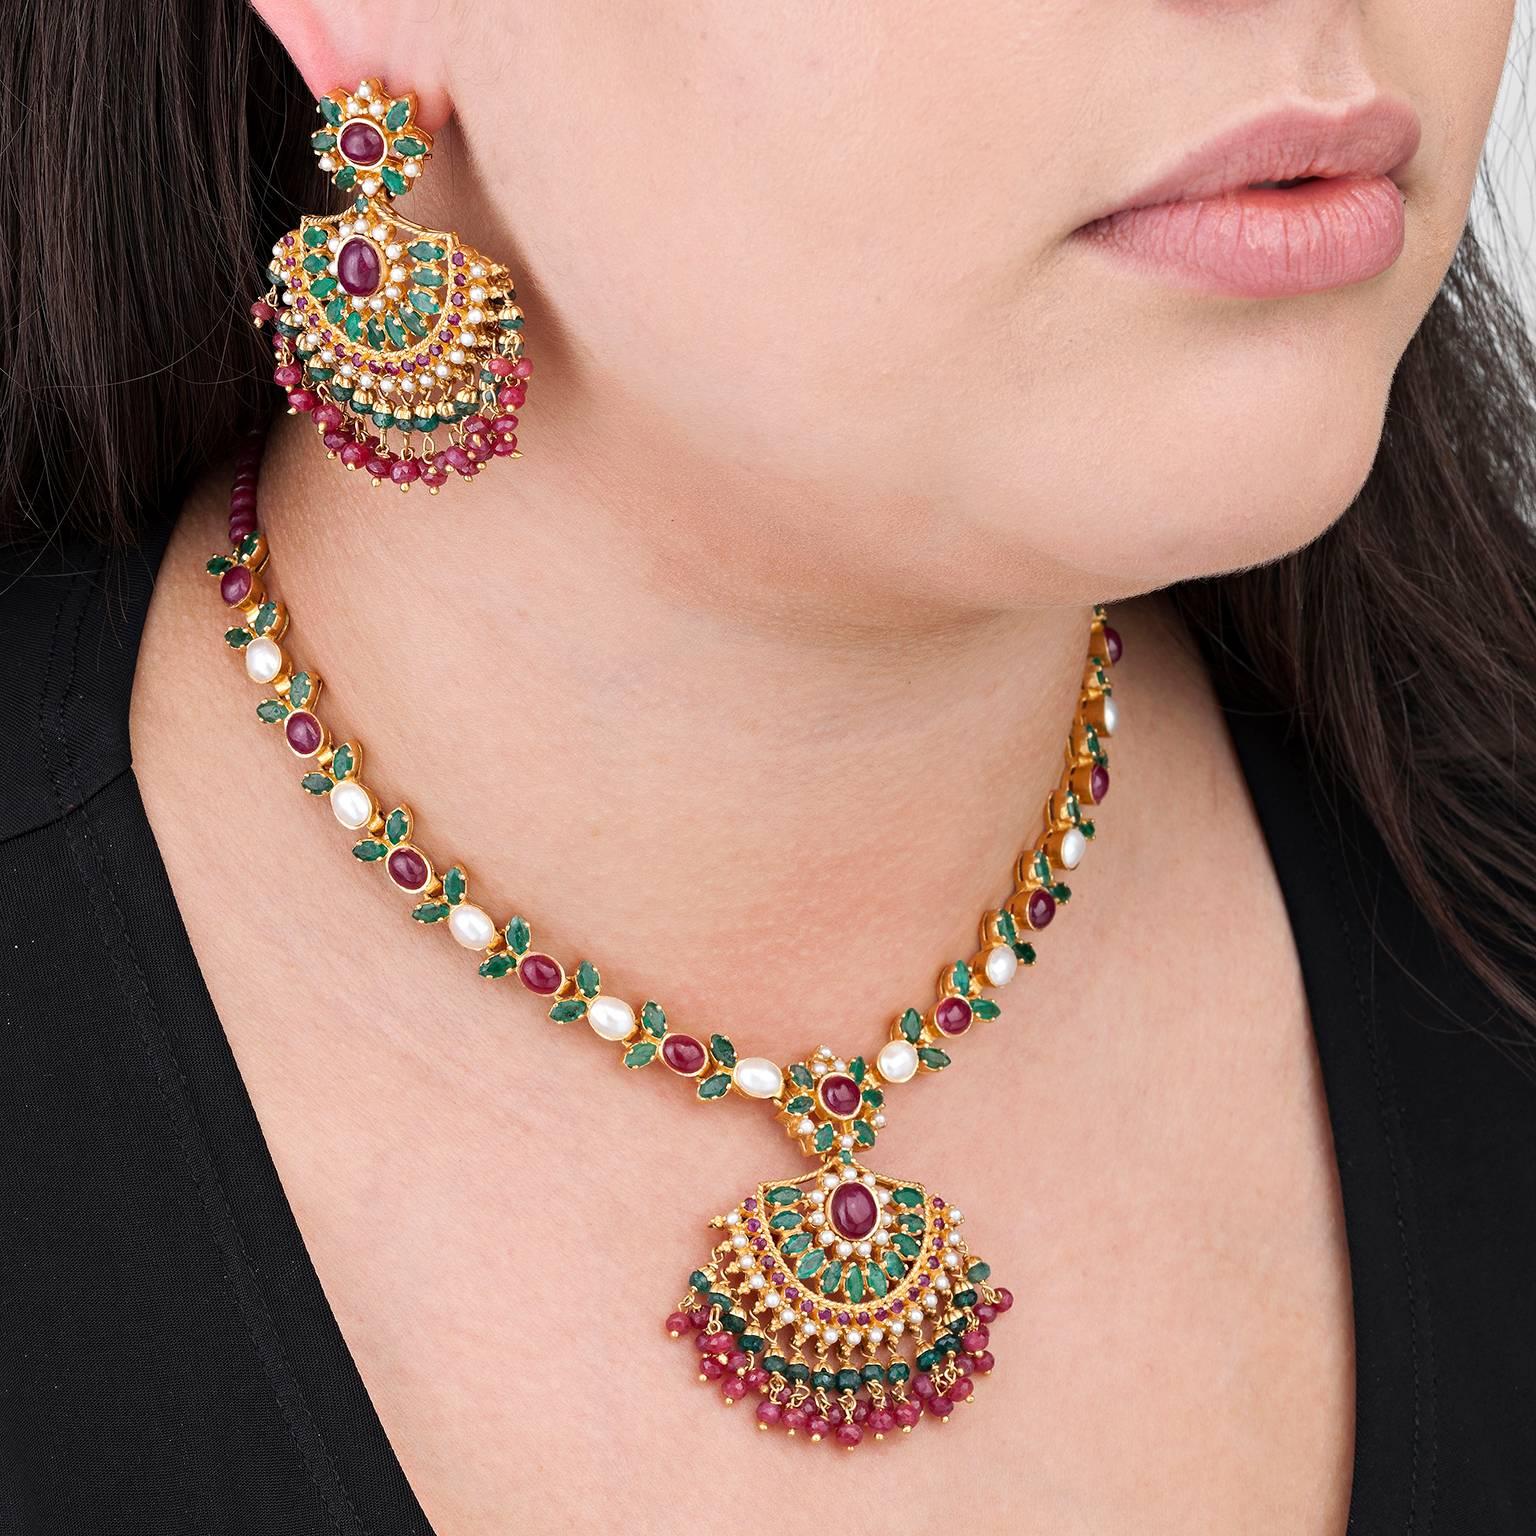 pearl ruby emerald earrings